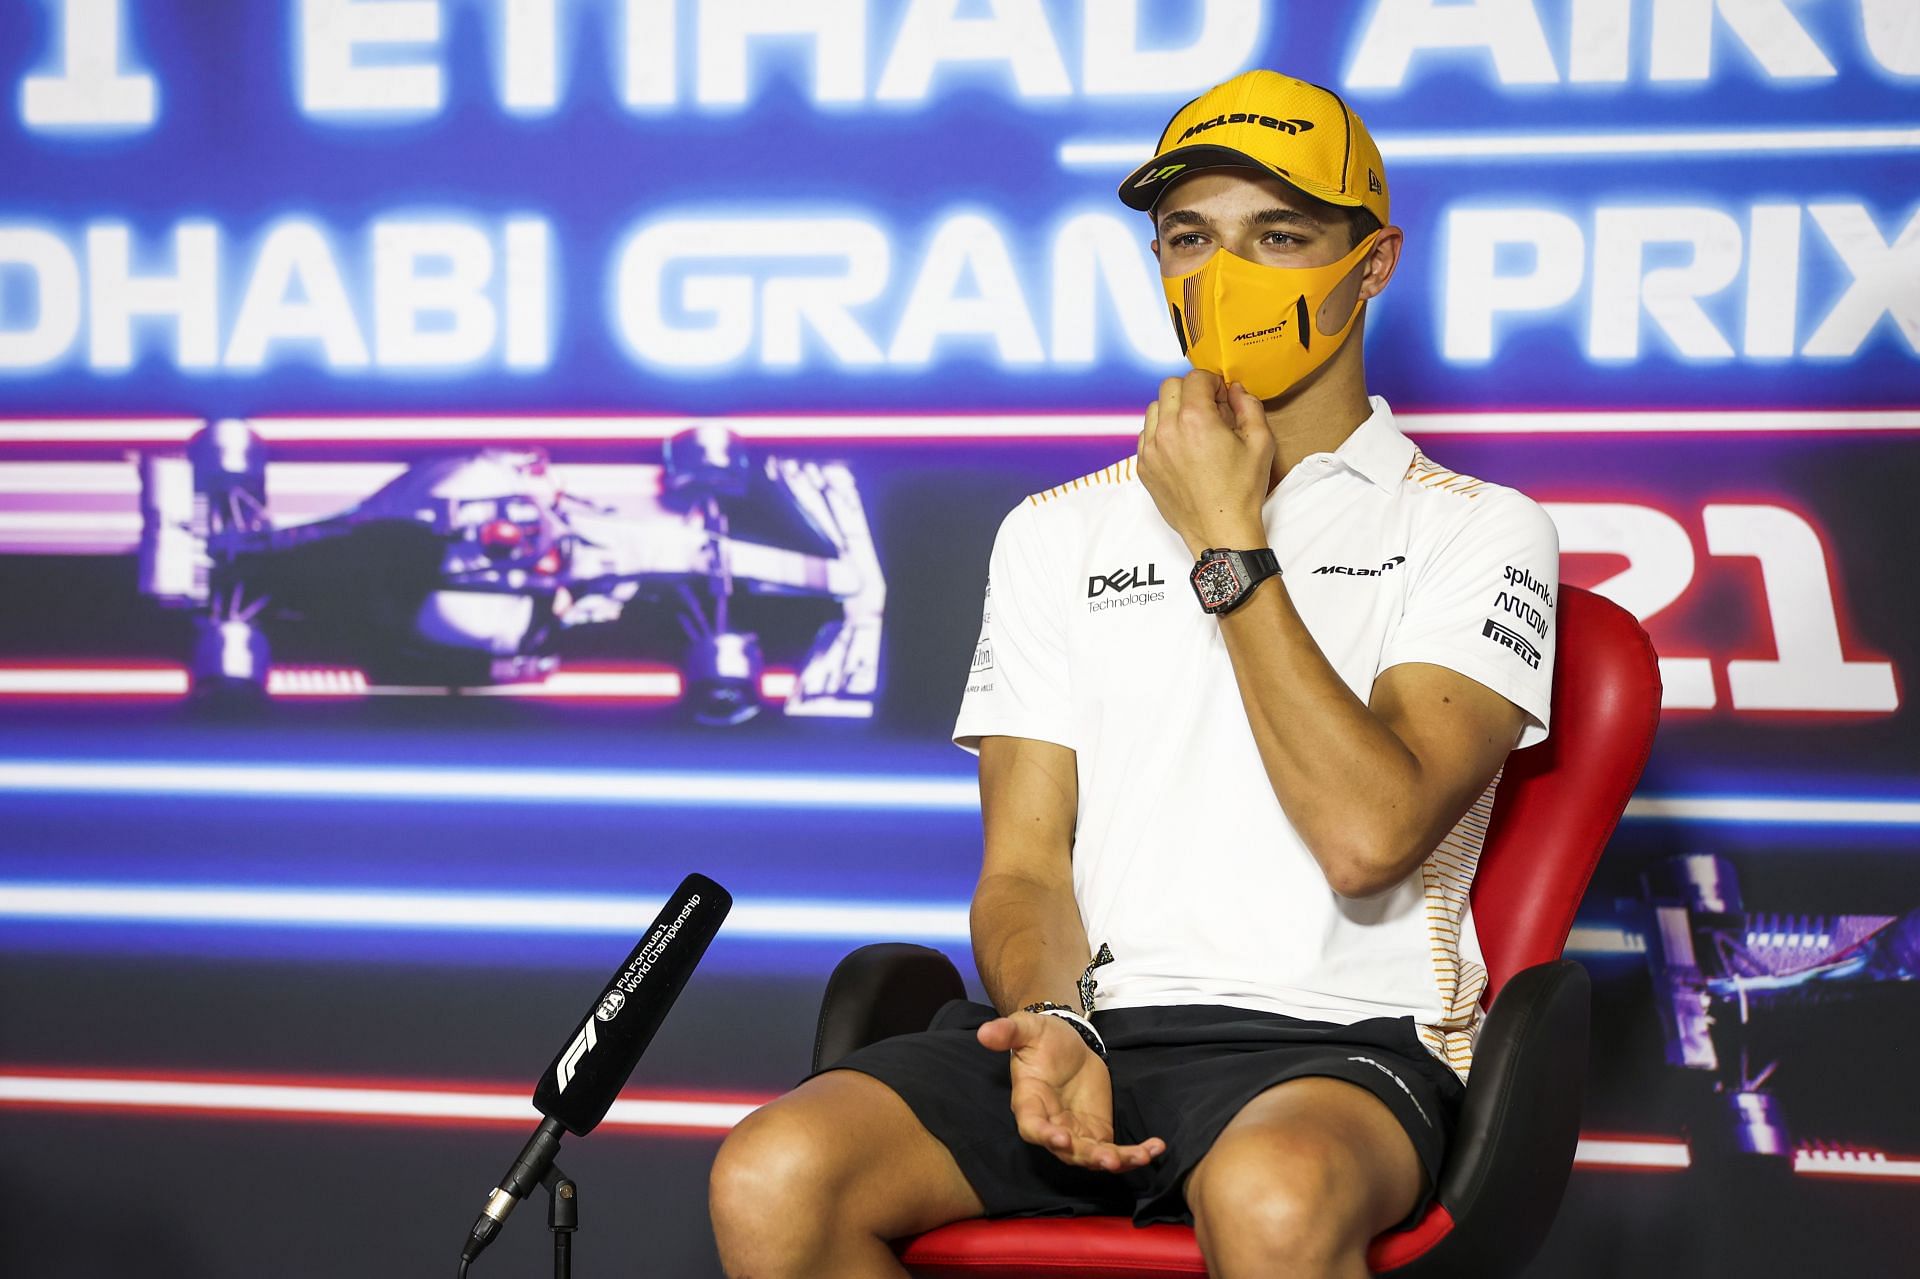 F1 Grand Prix of Abu Dhabi - Previews